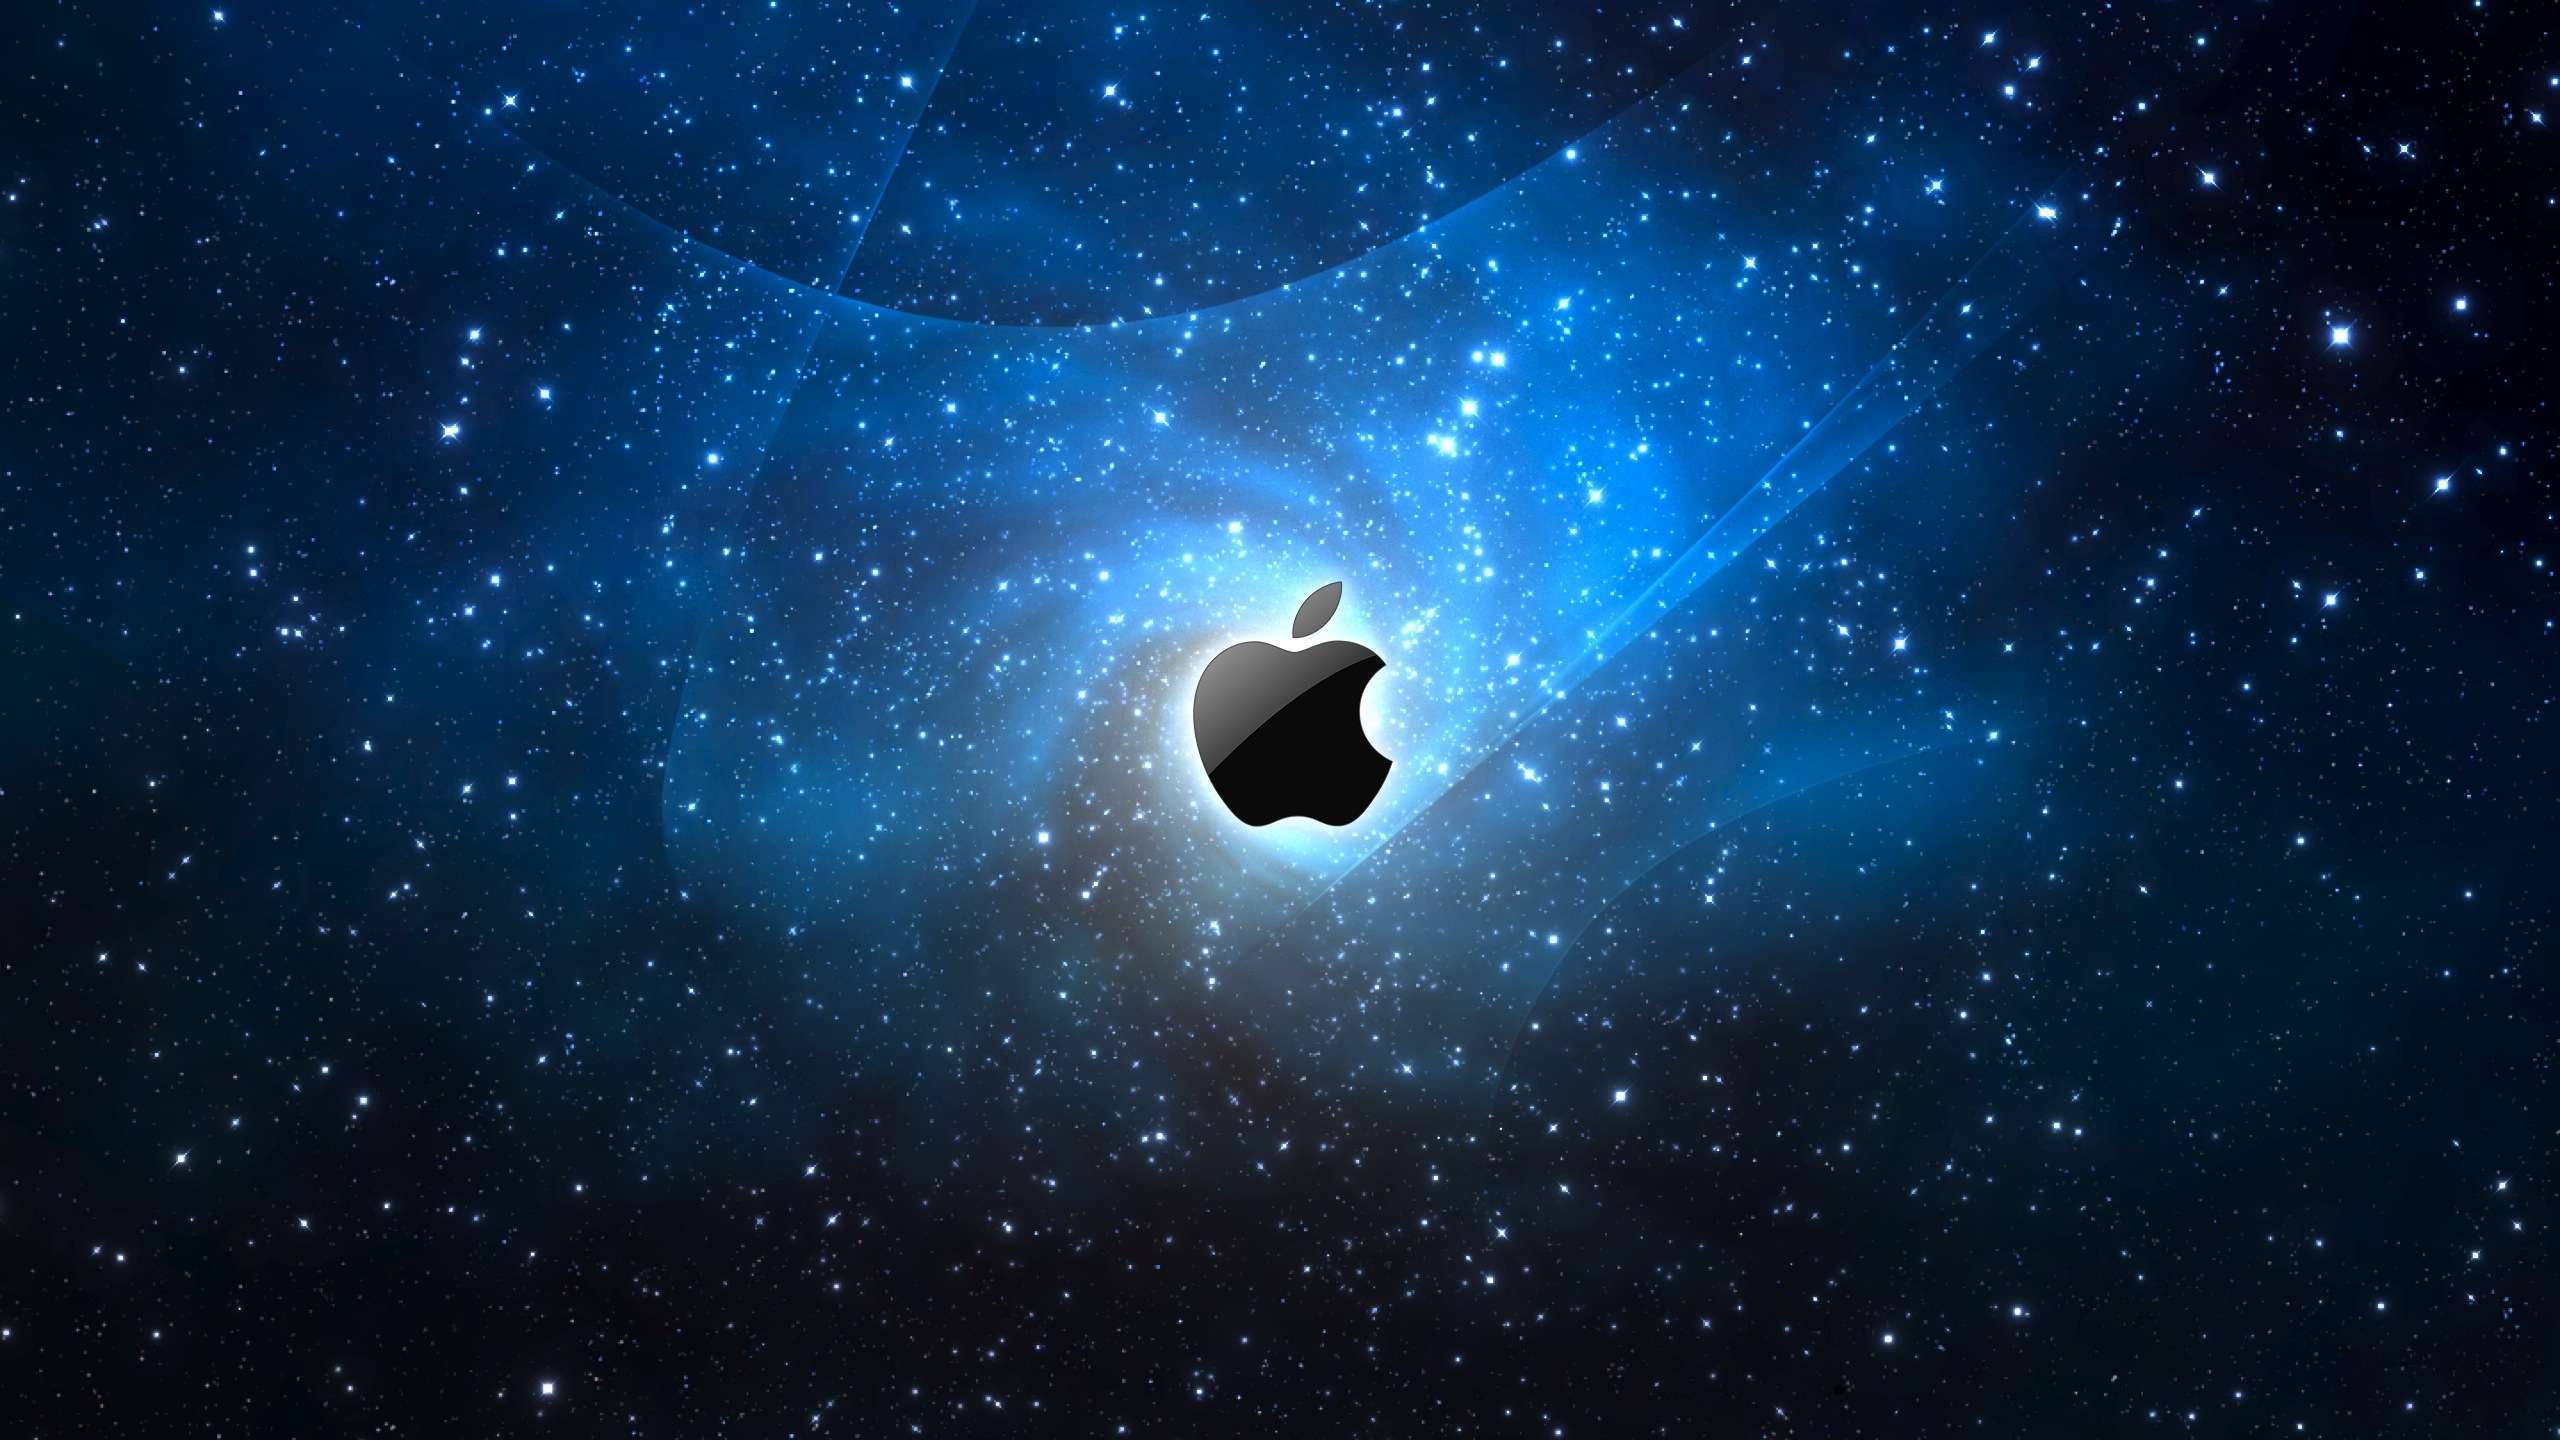 Apple Galaxy wallpaper for iMac. HD Wallpaper Source